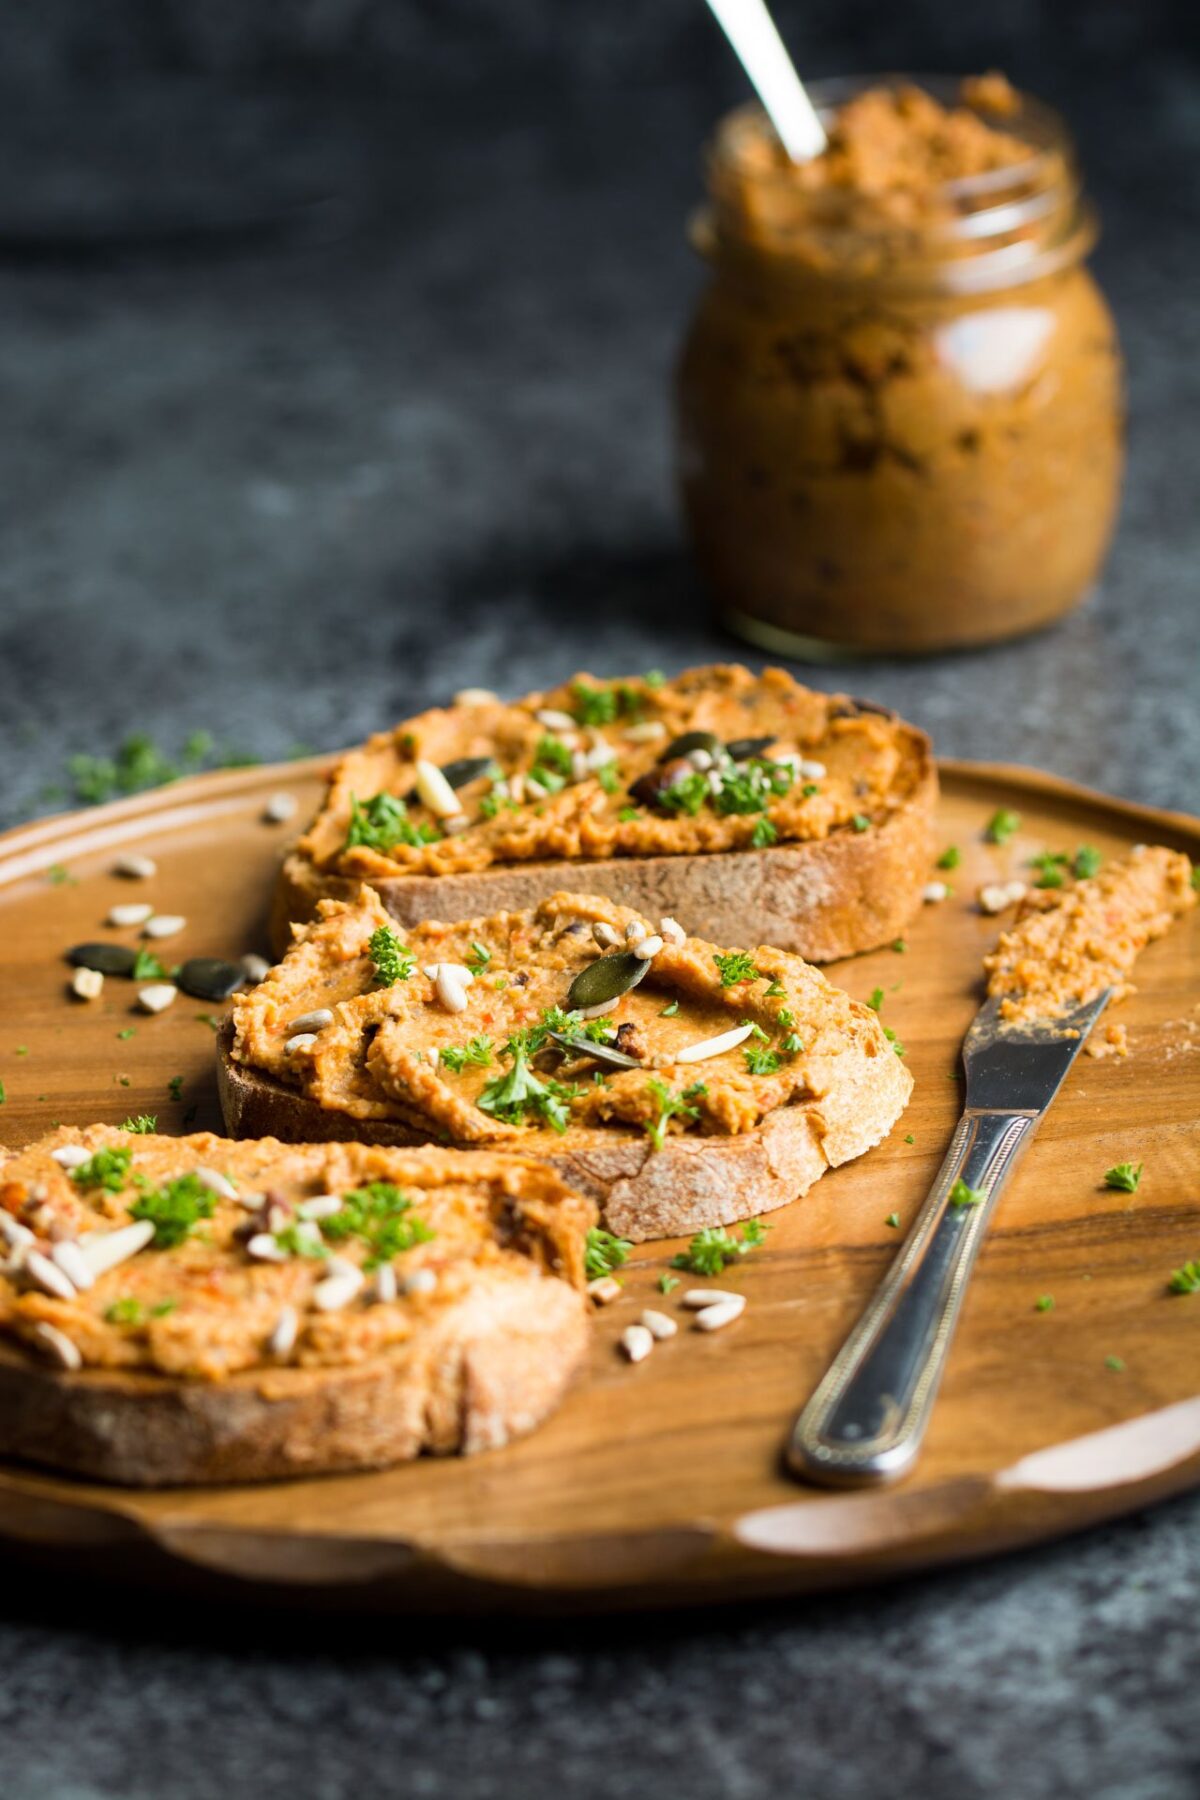 Vegan Pate spread on crusty bread on a wooden cutting board.